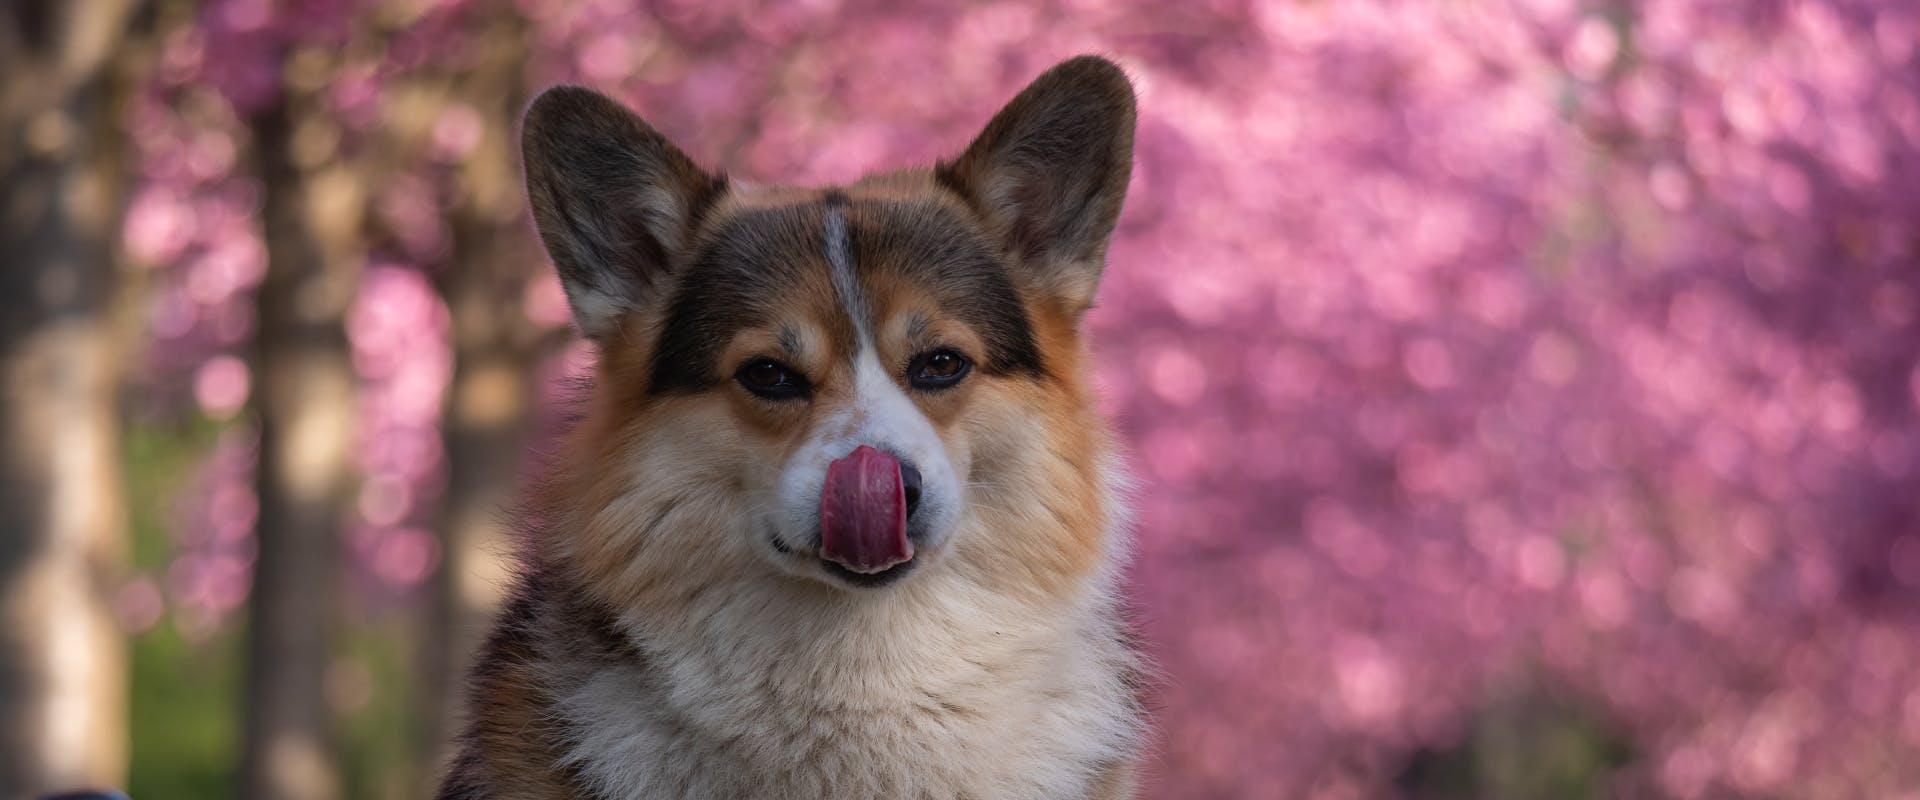 A dog licks its lips.